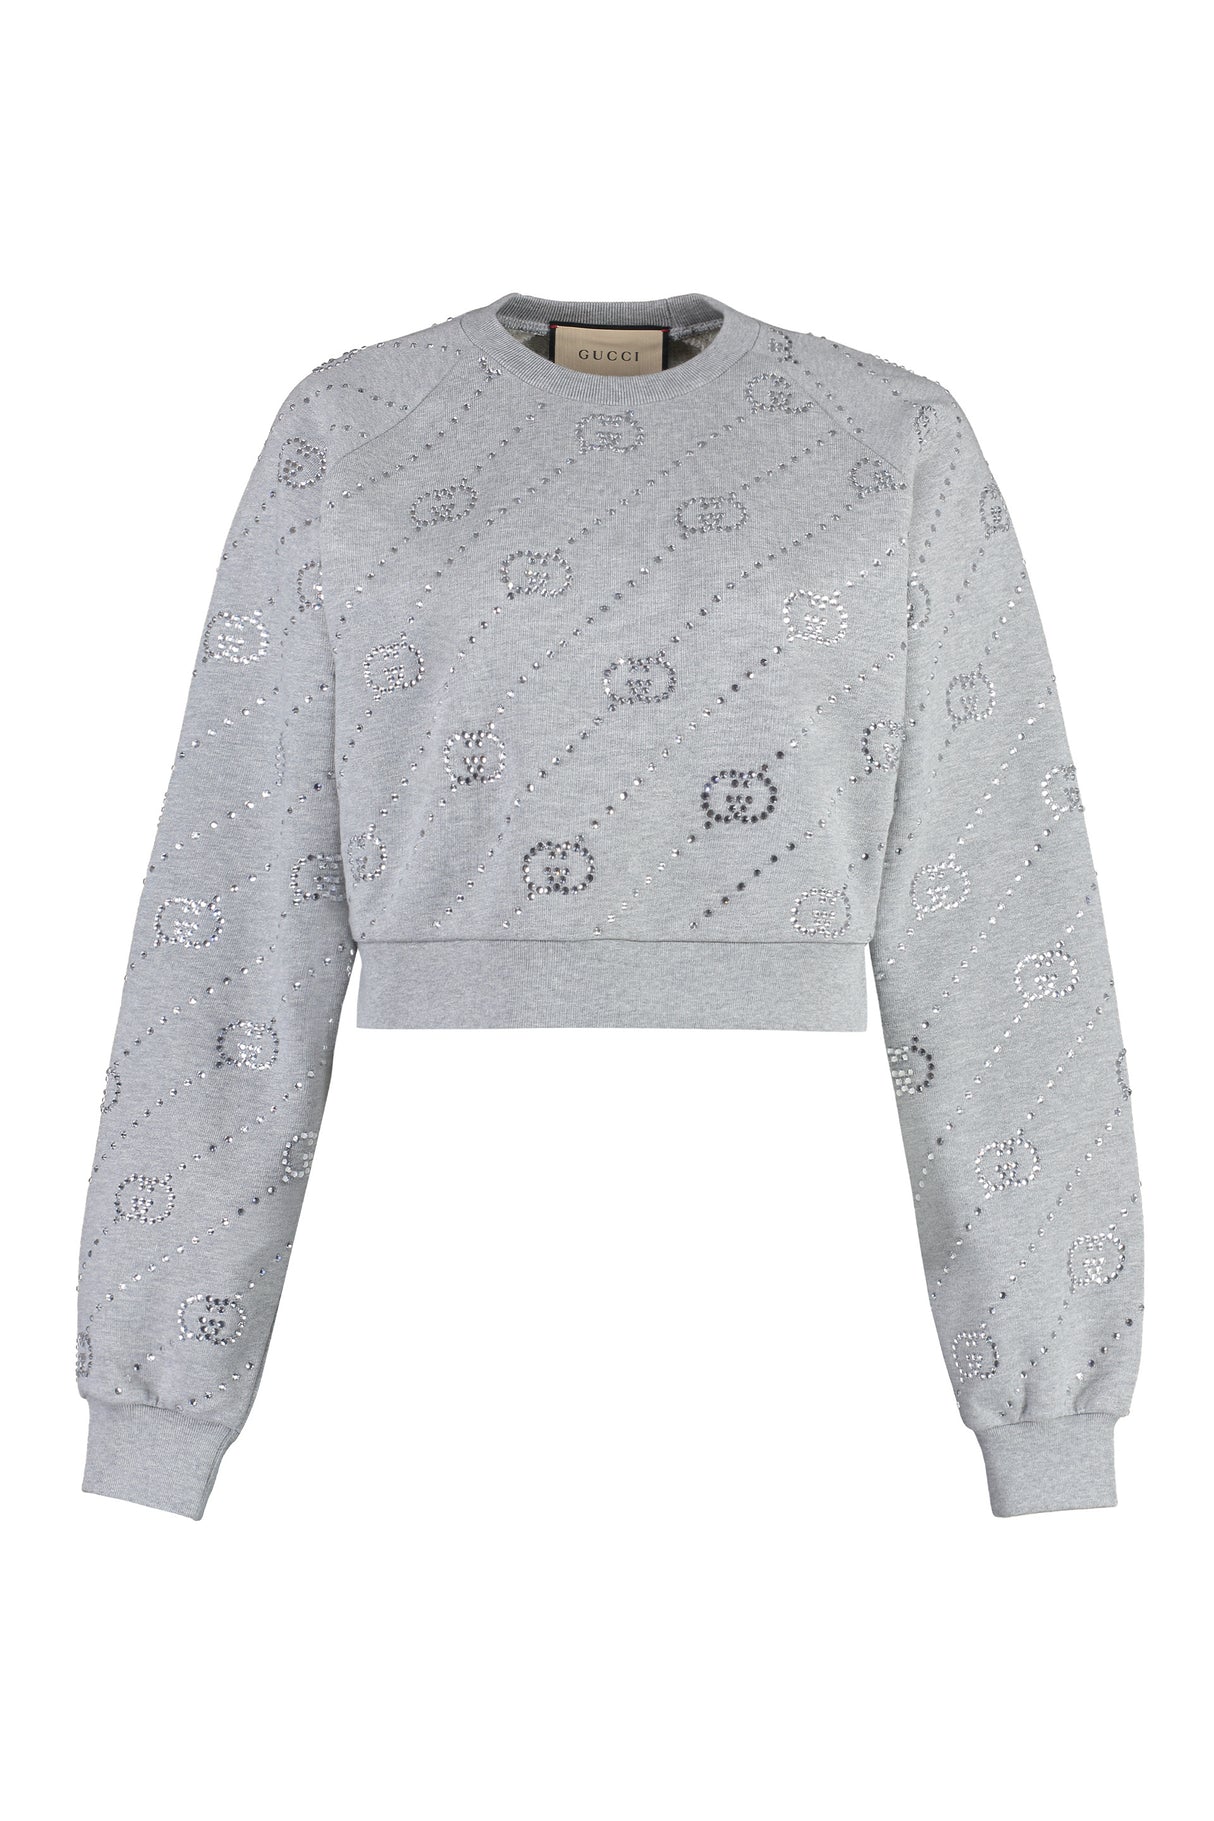 GUCCI Rhinestone Grey Crew-Neck Sweatshirt for Women - FW23 Collection